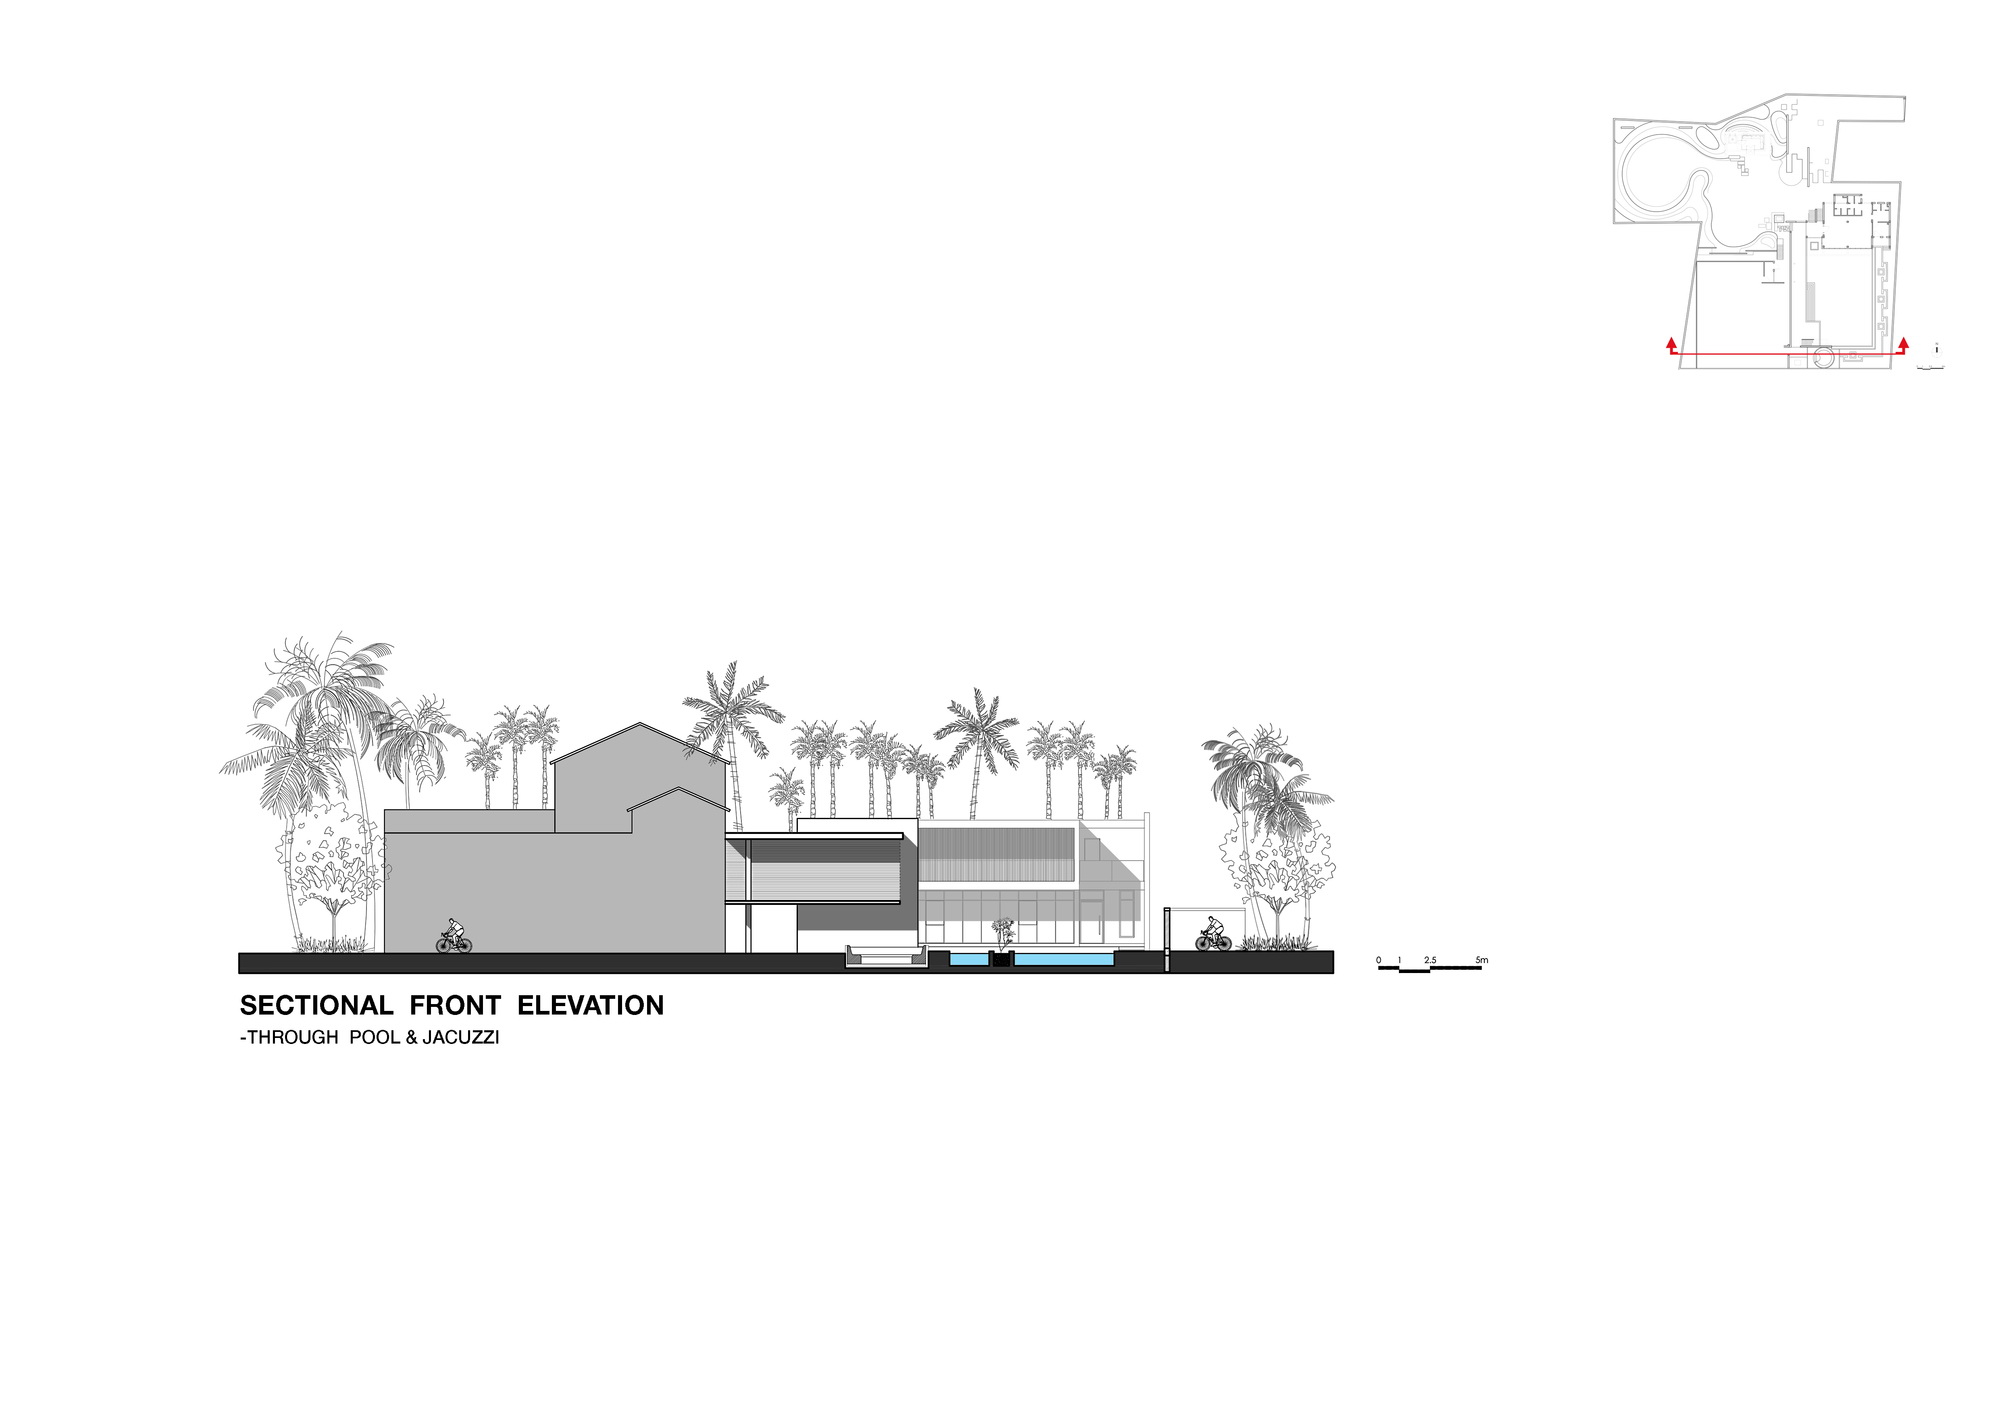 Pool House by Abin Design Studio